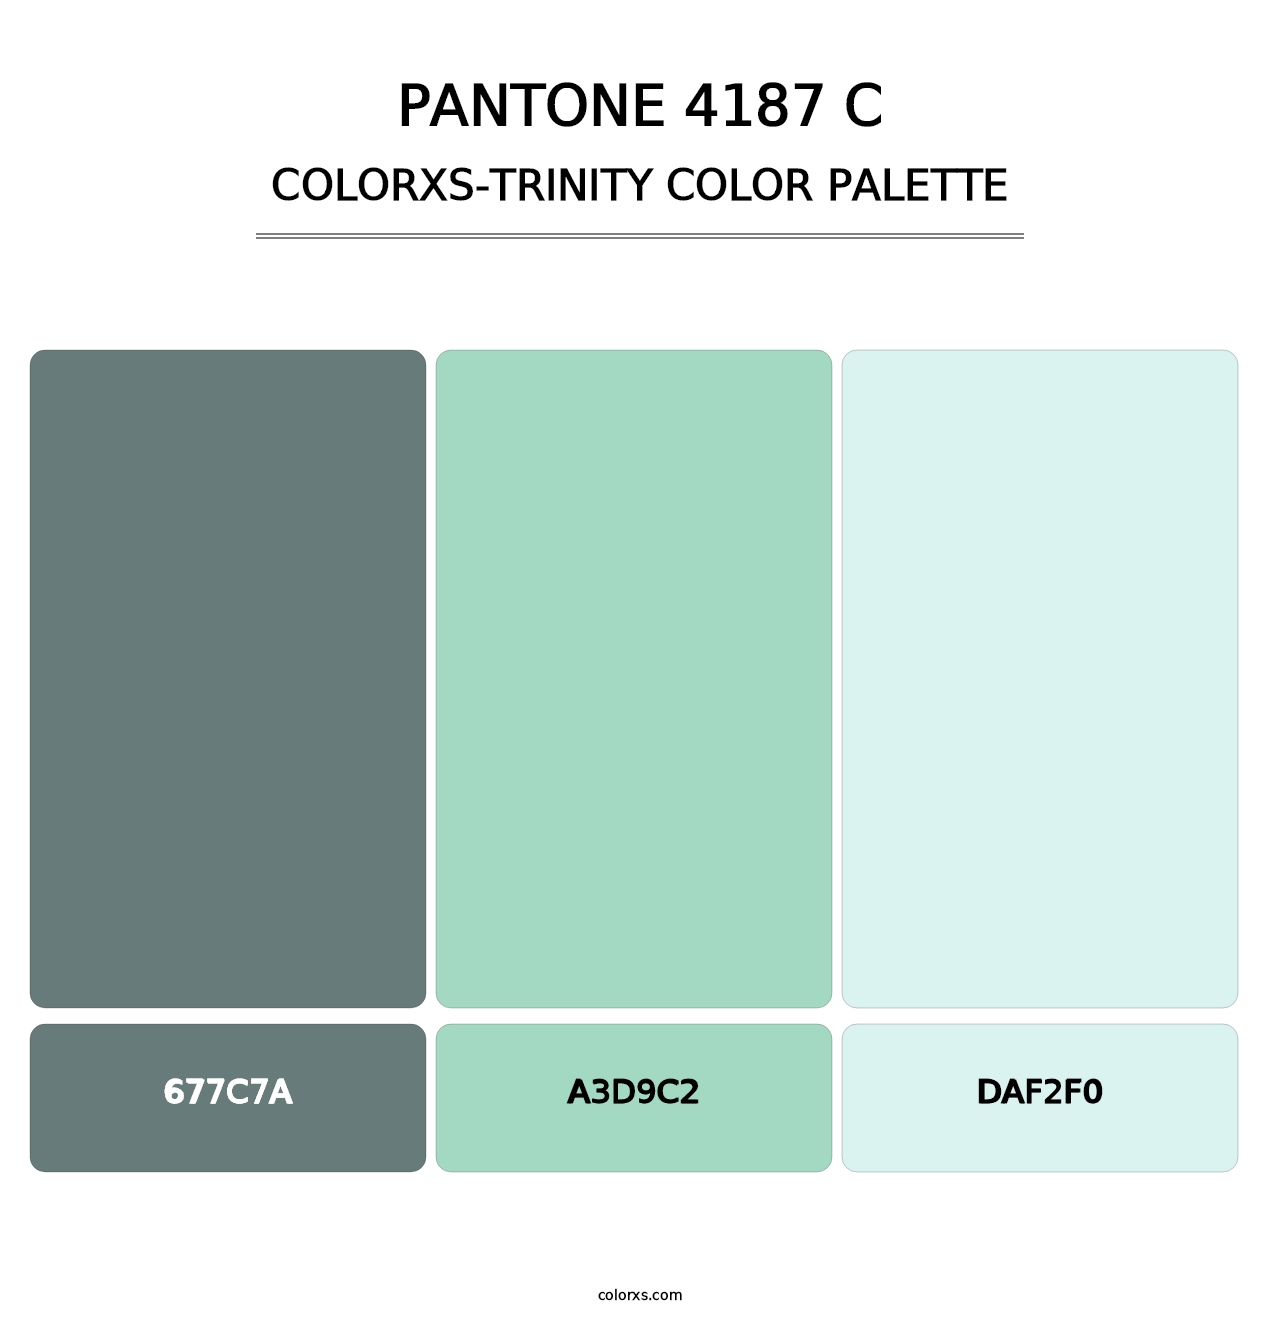 PANTONE 4187 C - Colorxs Trinity Palette